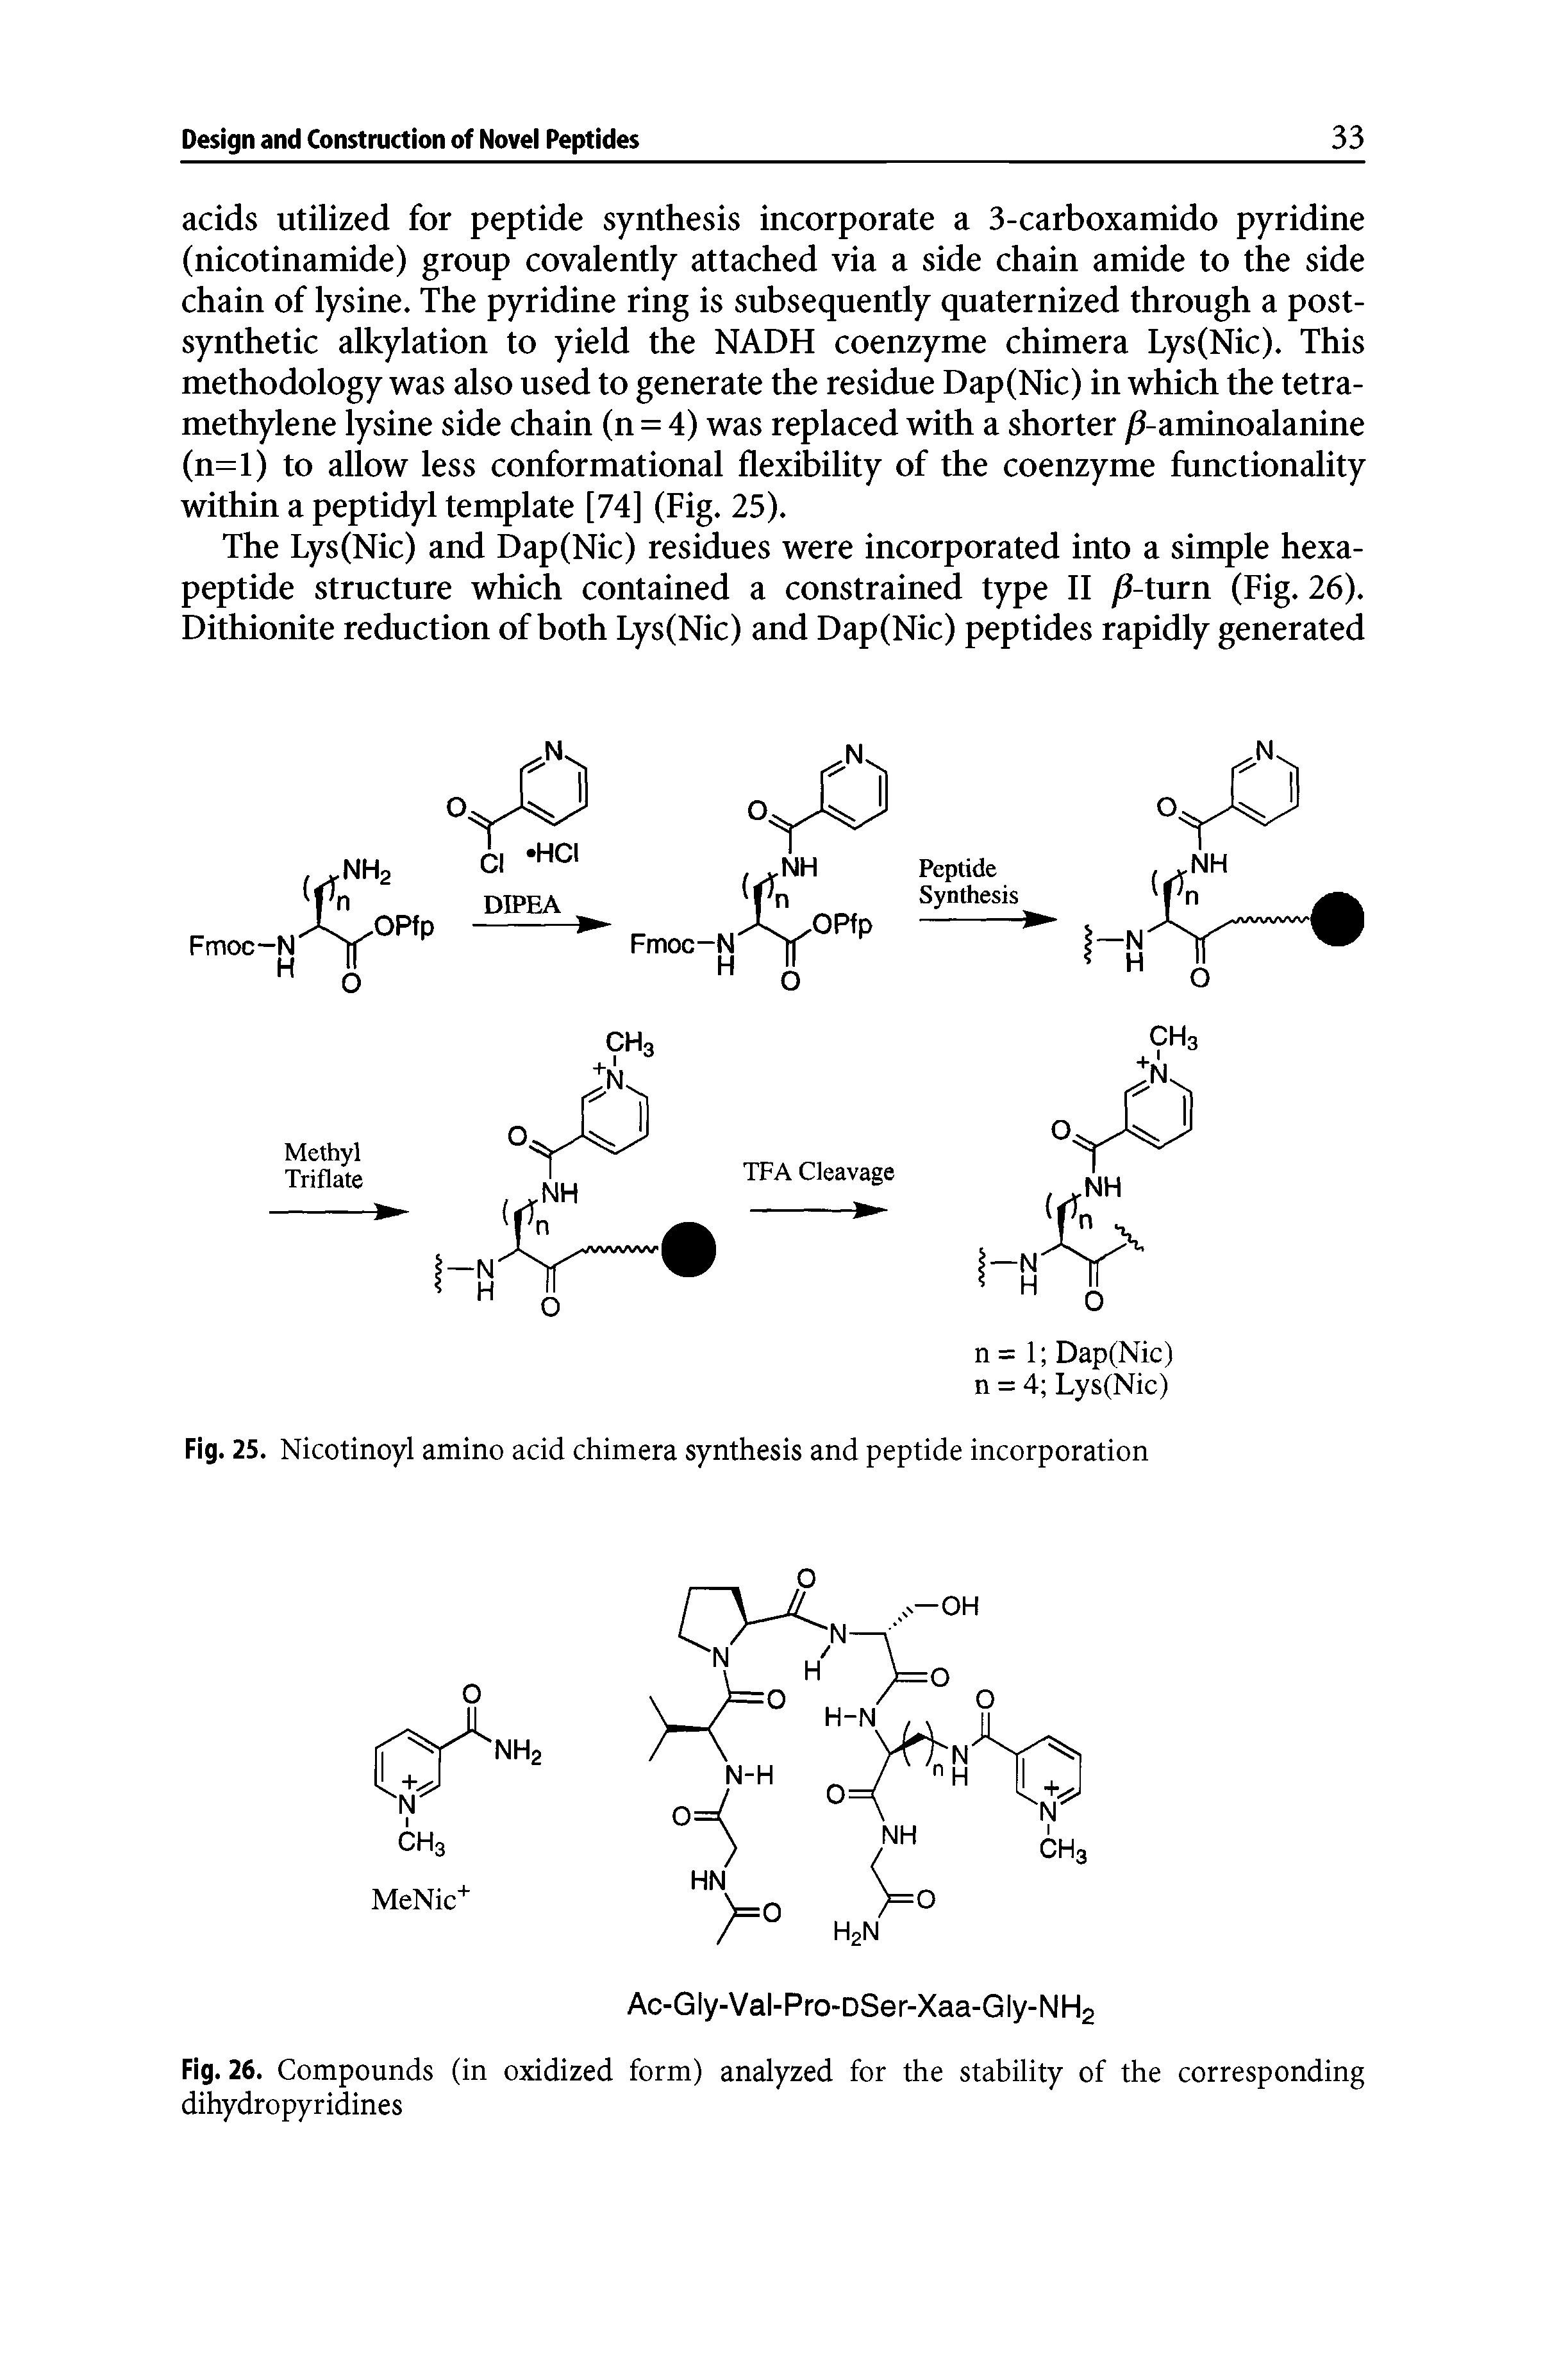 Fig. 25. Nicotinoyl amino acid chimera synthesis and peptide incorporation...